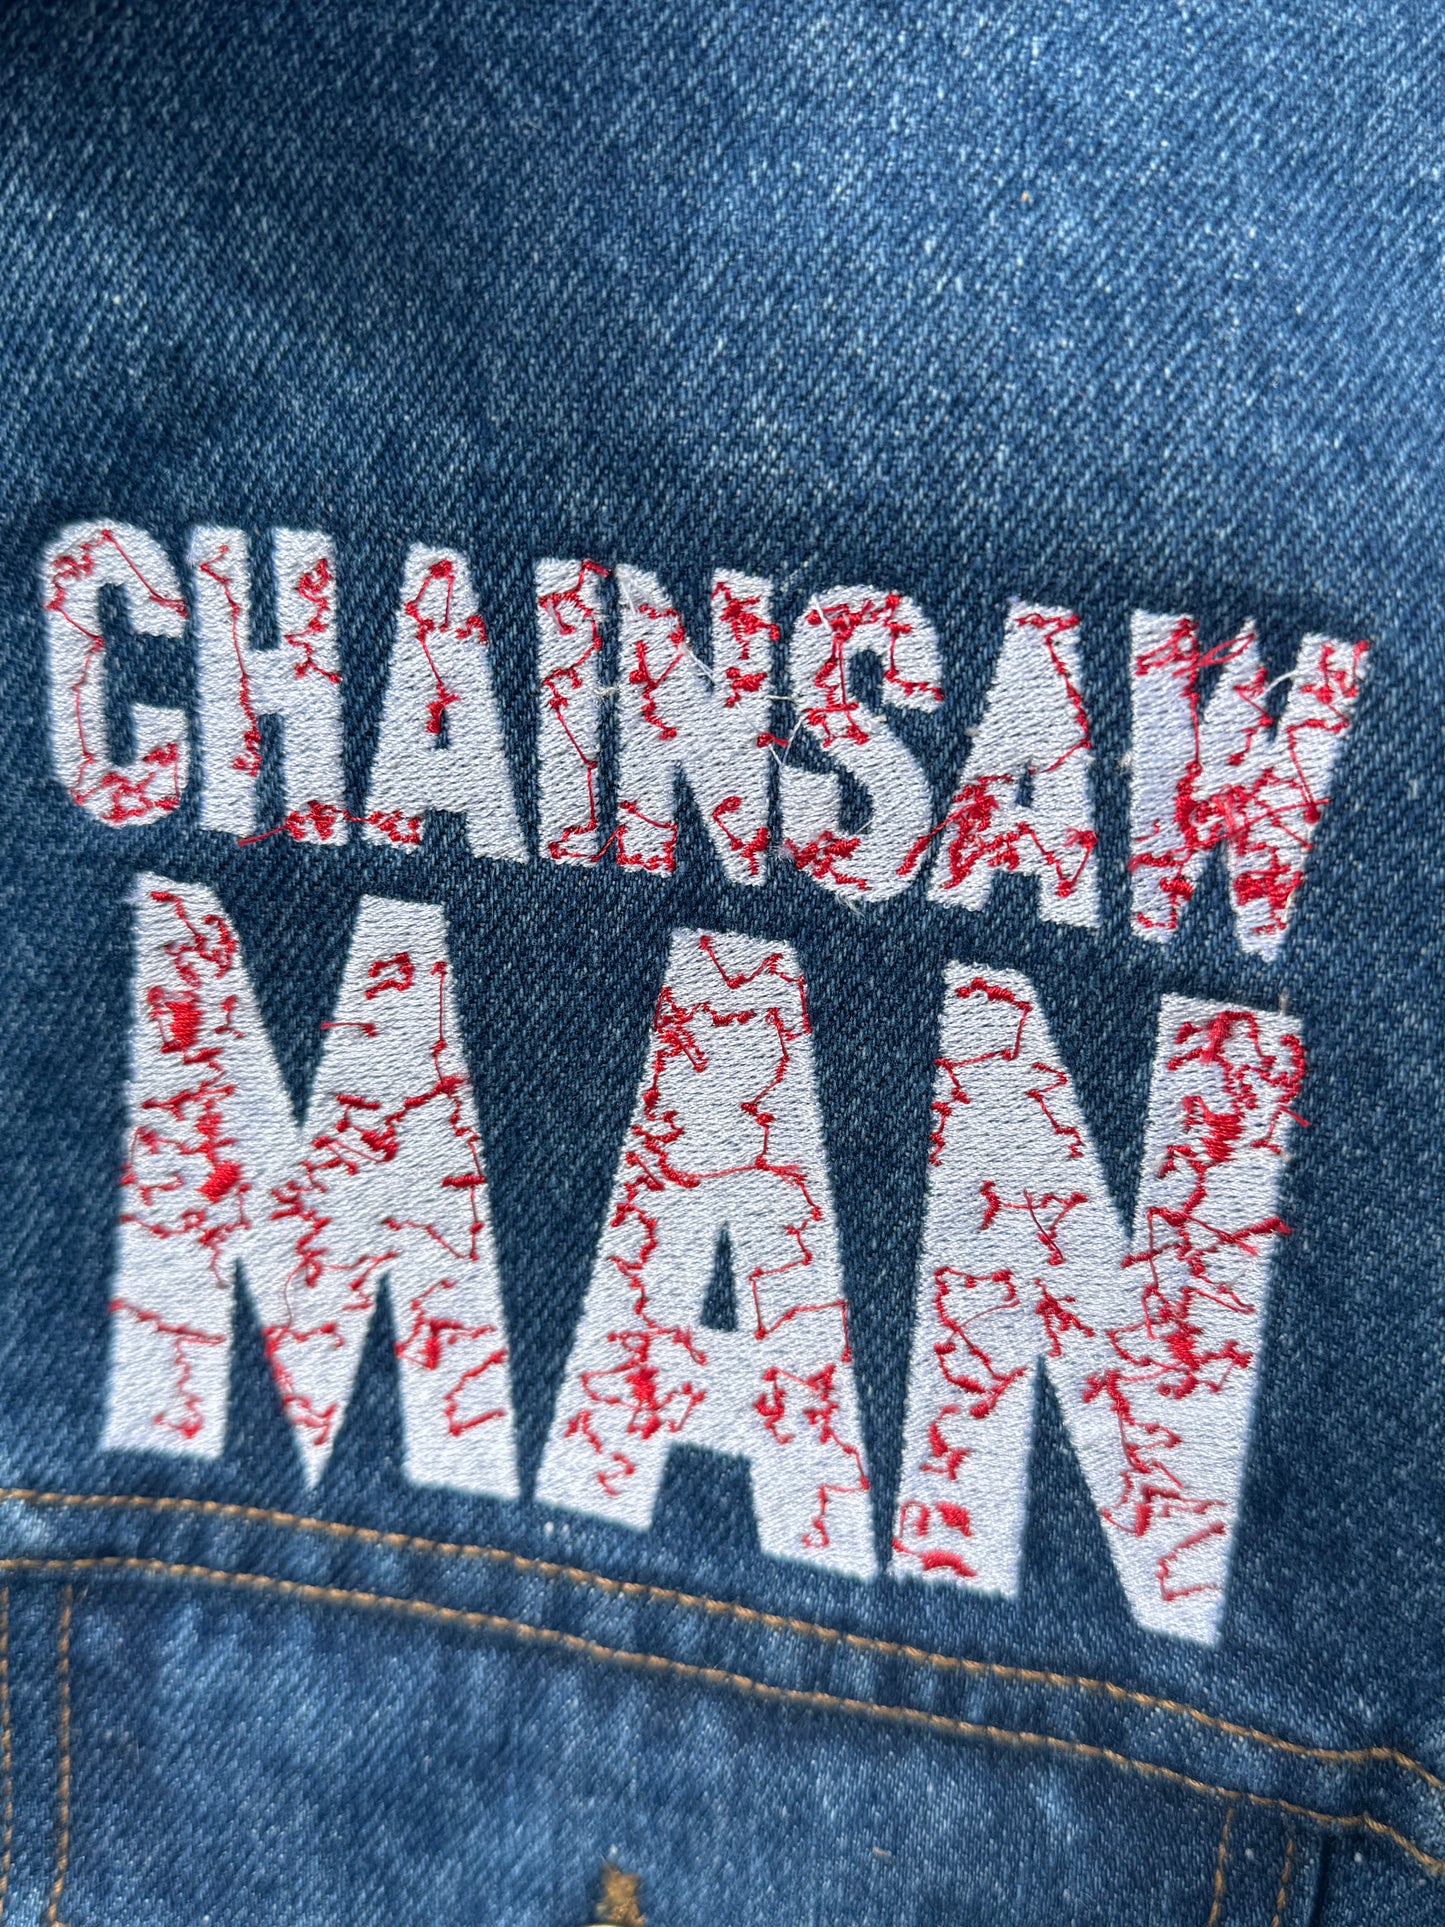 Chainsaw Man Denim Jacket